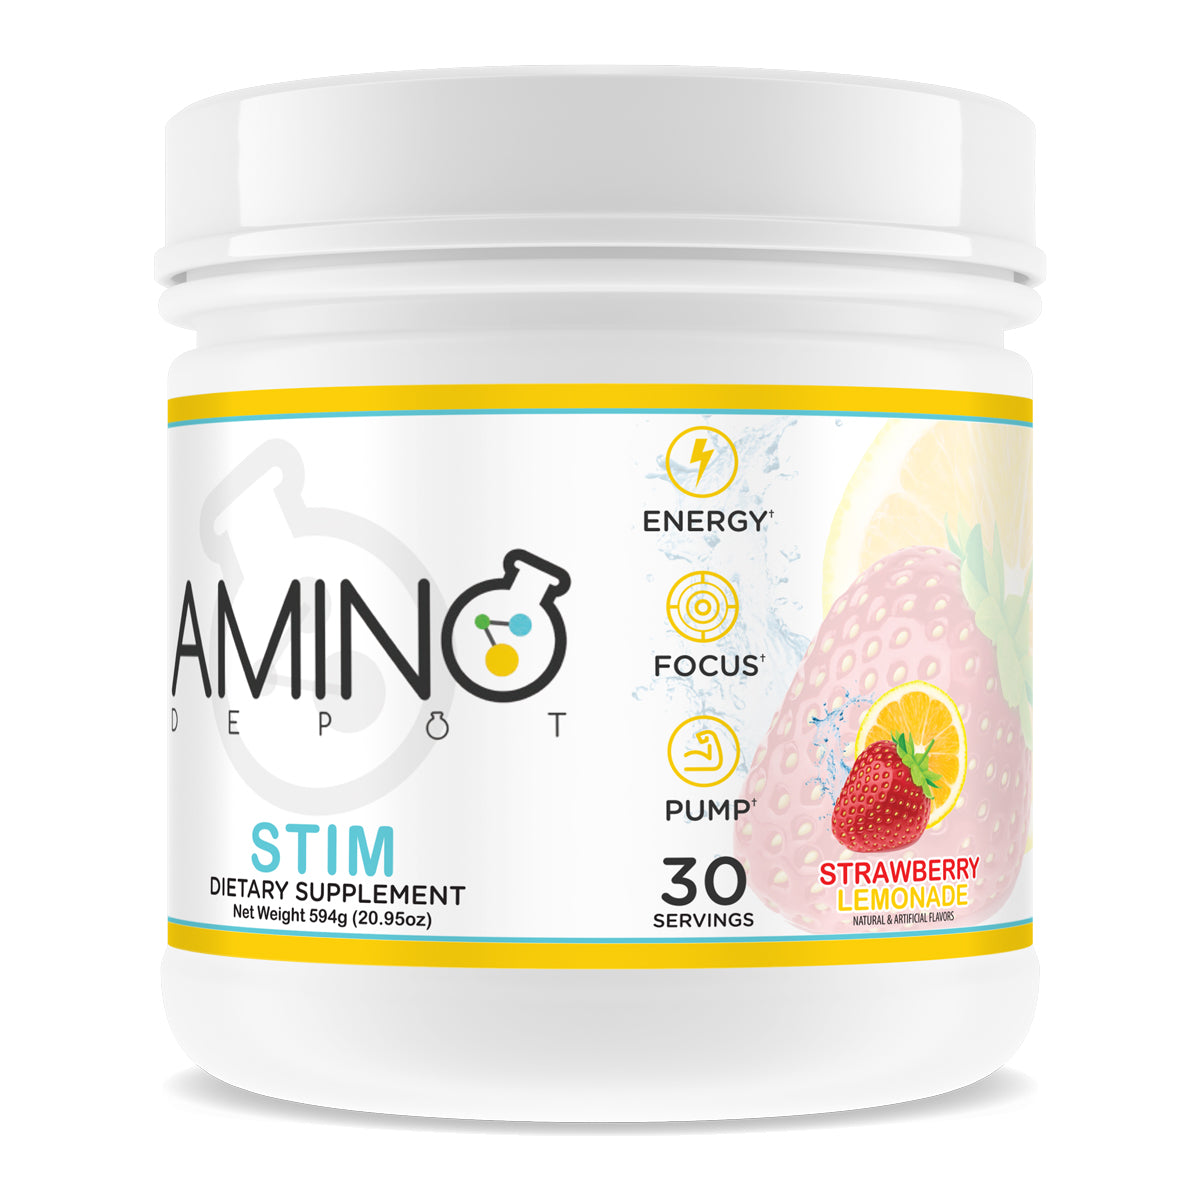 Pre-Workout | Stim | Amino Depot